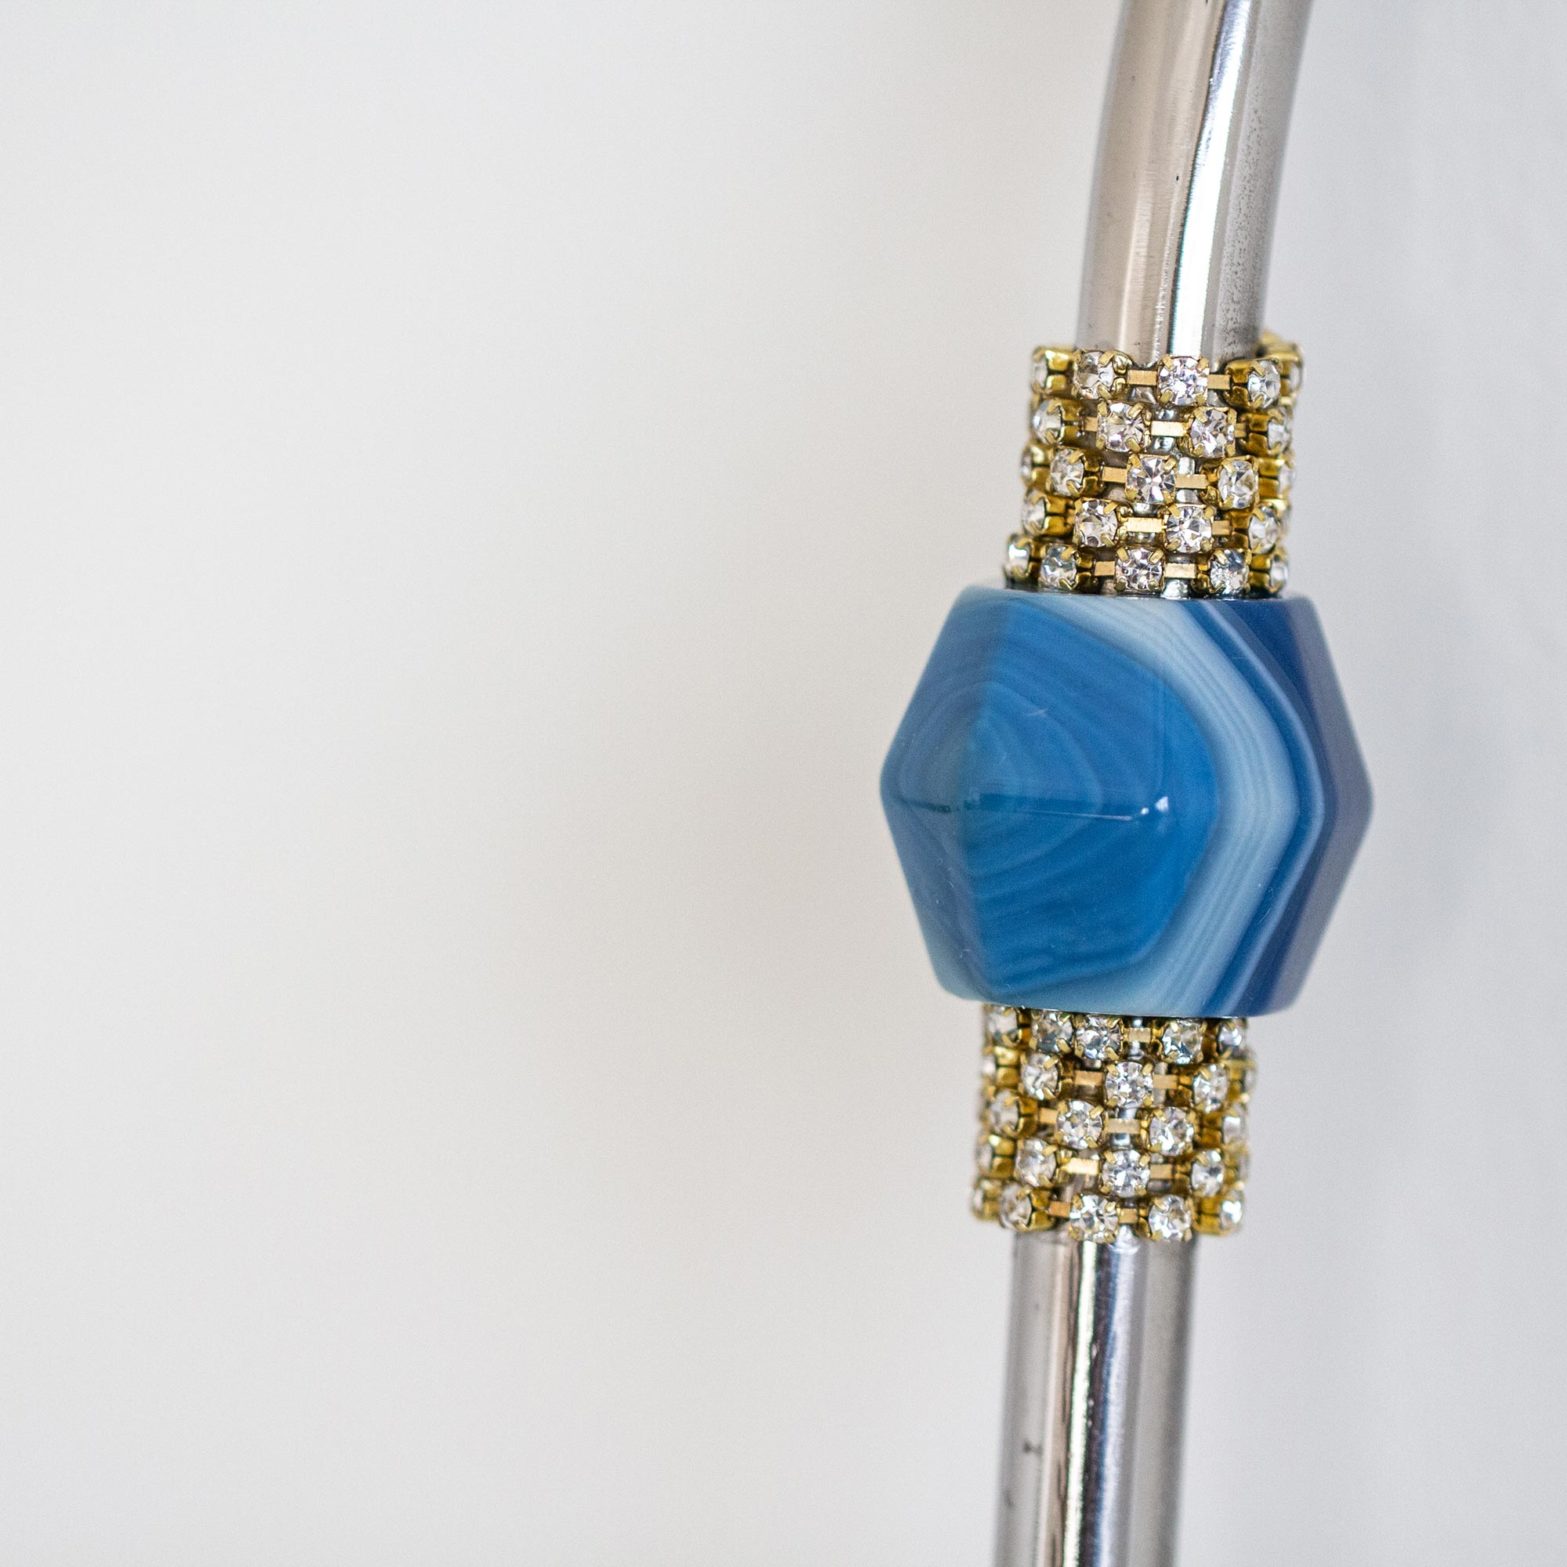 Diamonte Azul Bomba – Spoon Filter – Decorative Crystals and Blue Gem